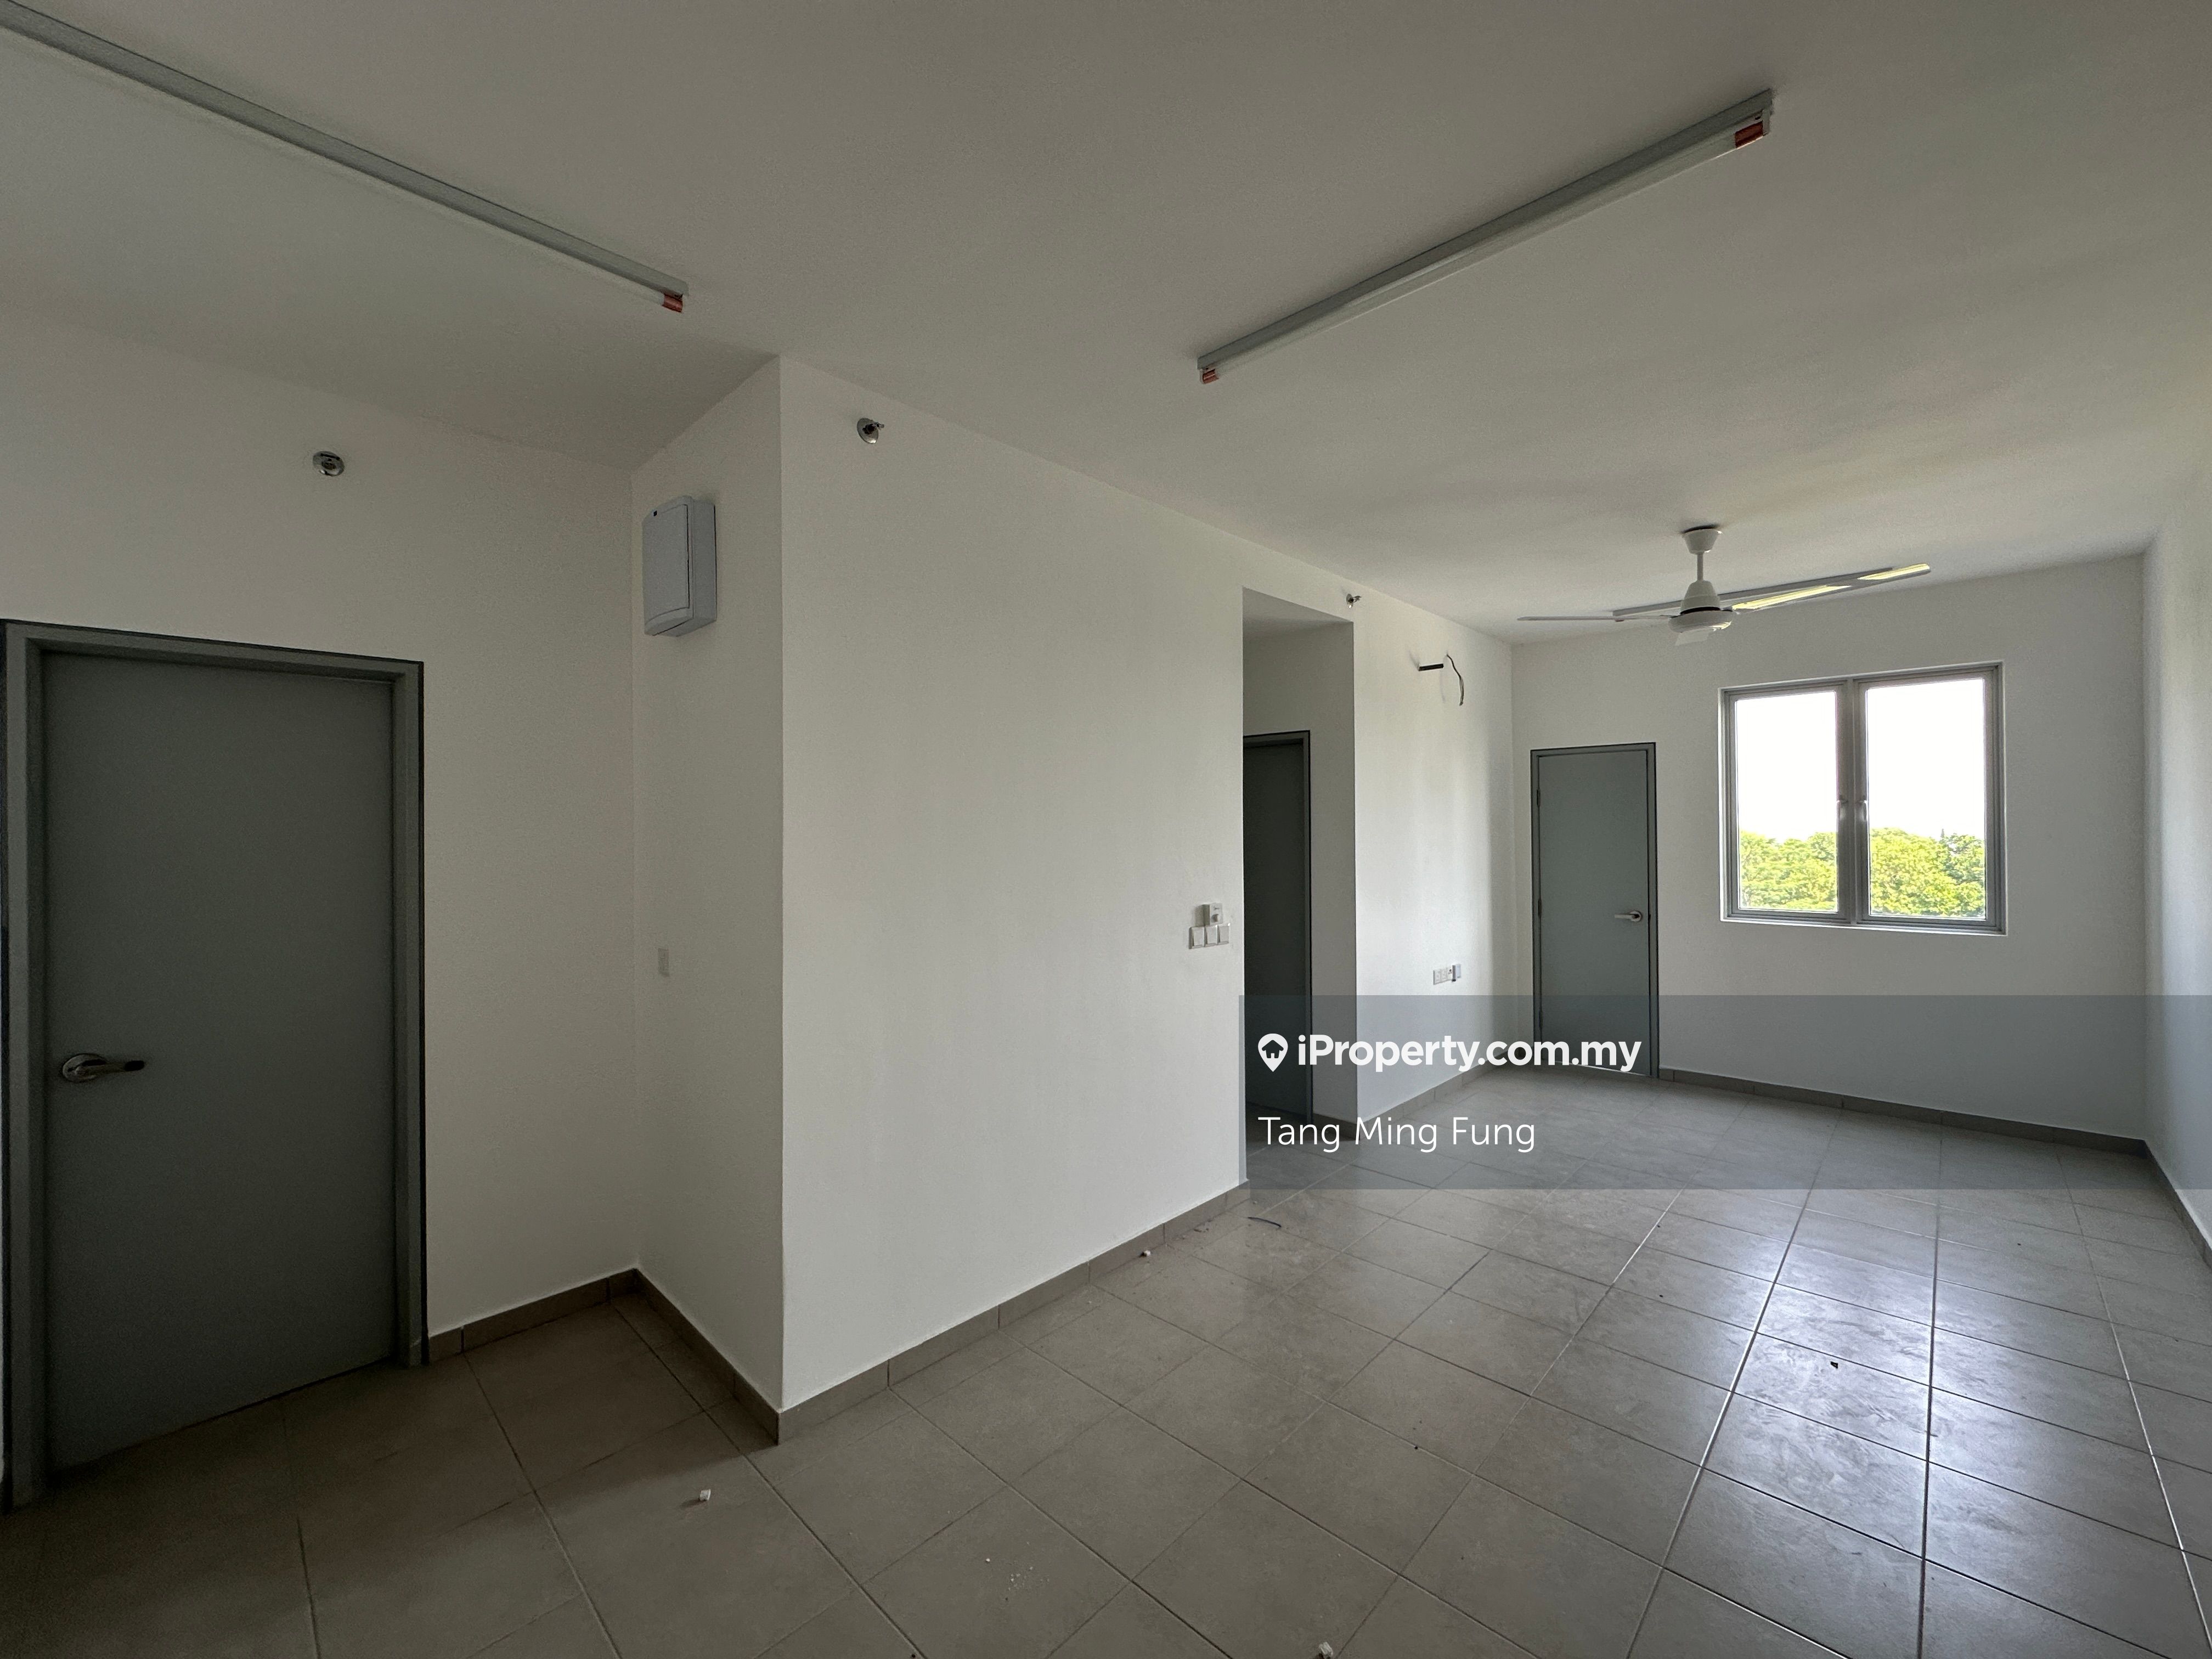 Tangerine Suites, Sunsuria City, Dengkil for rent - RM900 | iProperty ...